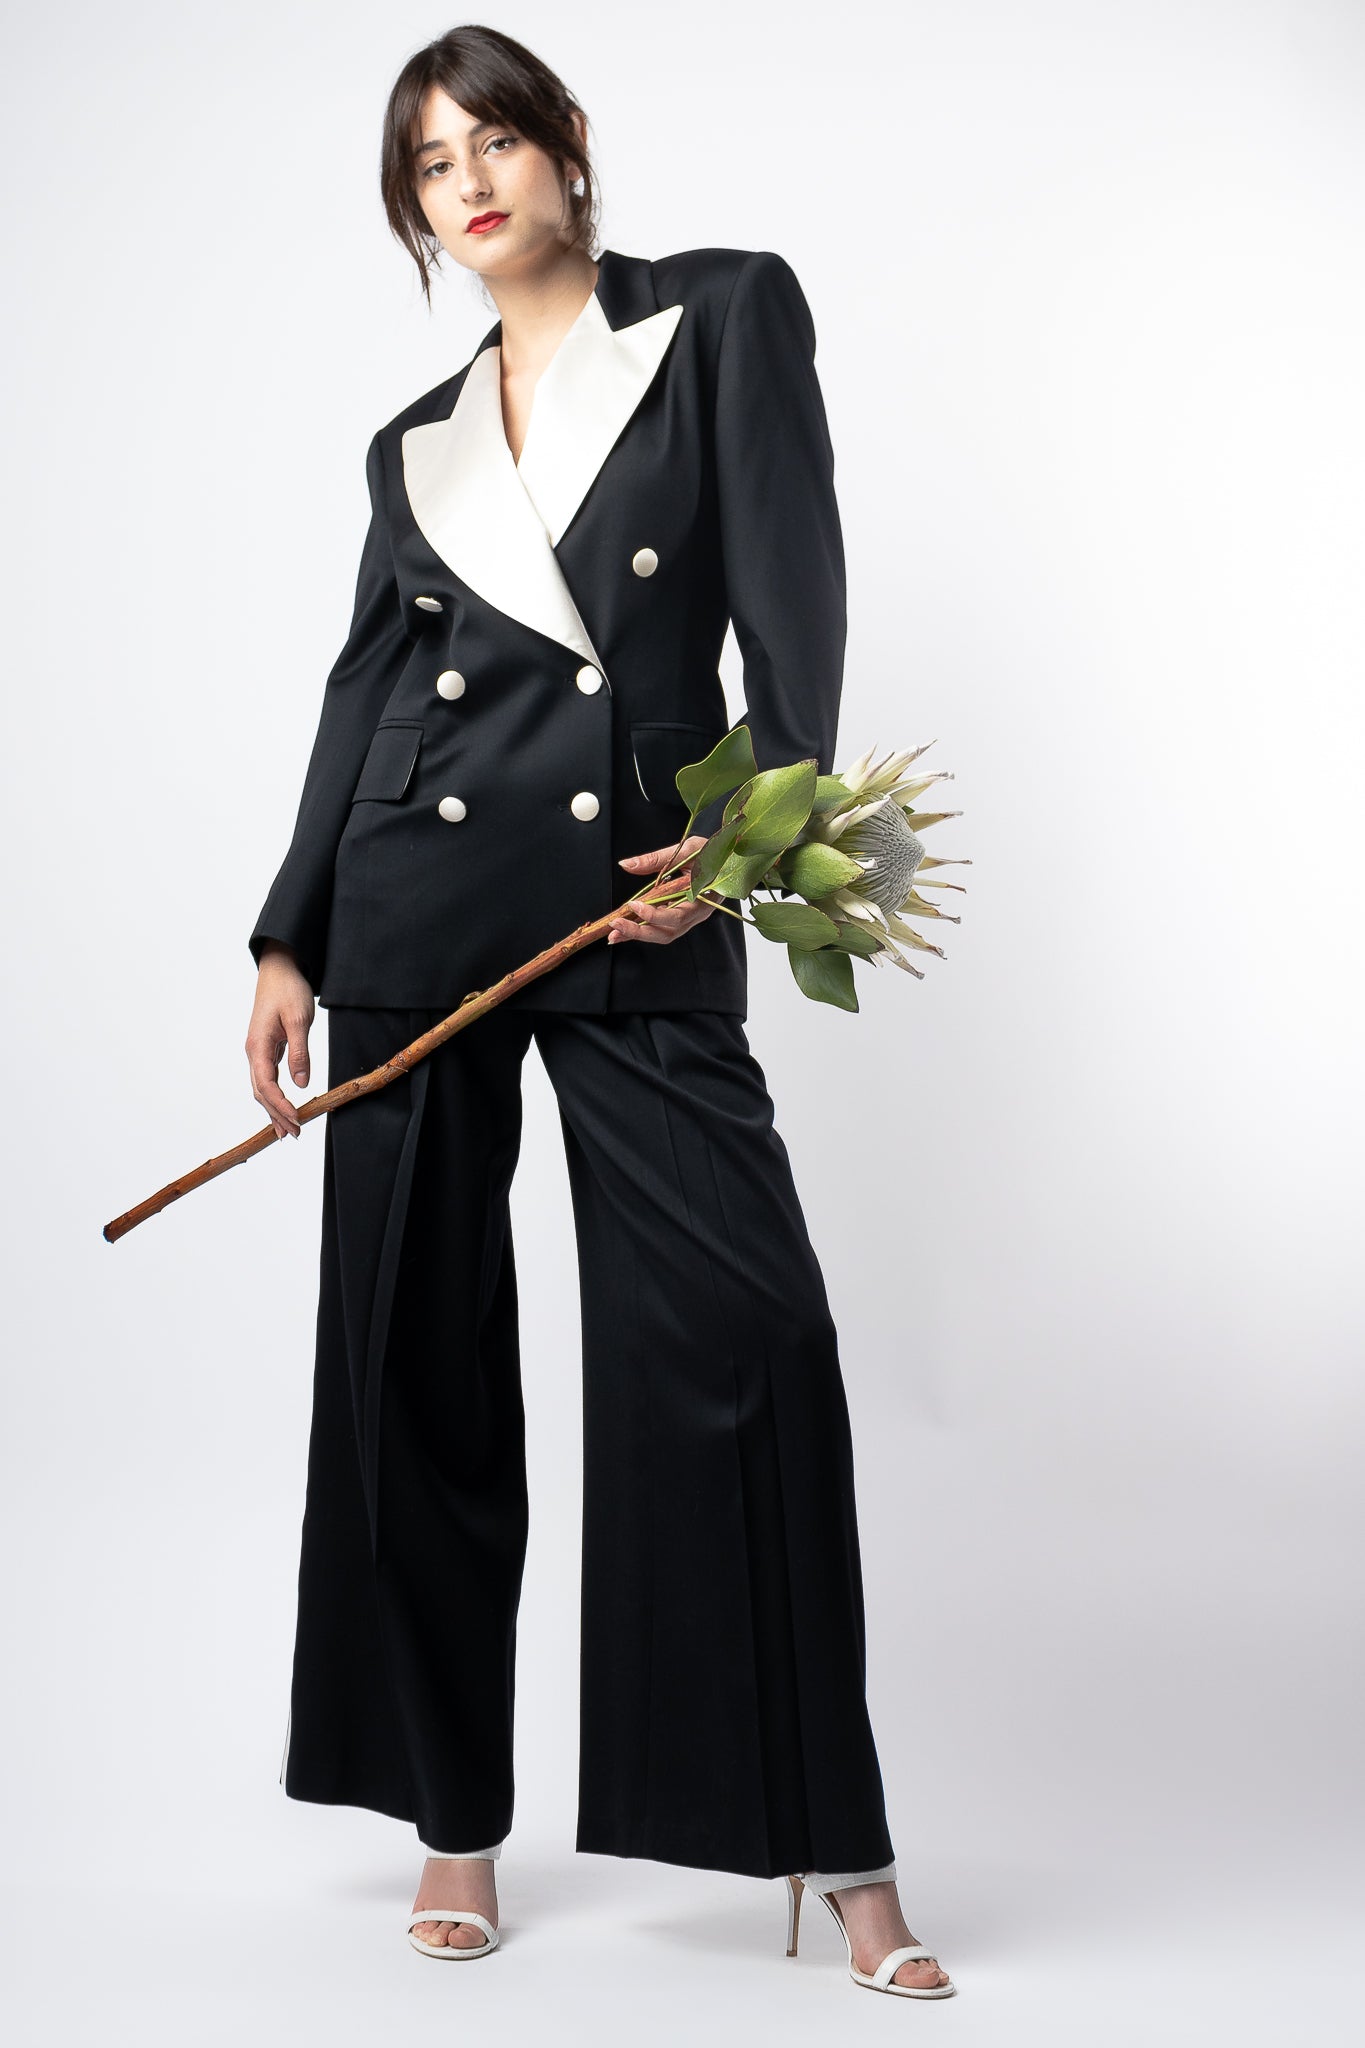 Recess Los Angeles Vintage Consignment Romy Reiner Escada Tuxedo Suit with flower